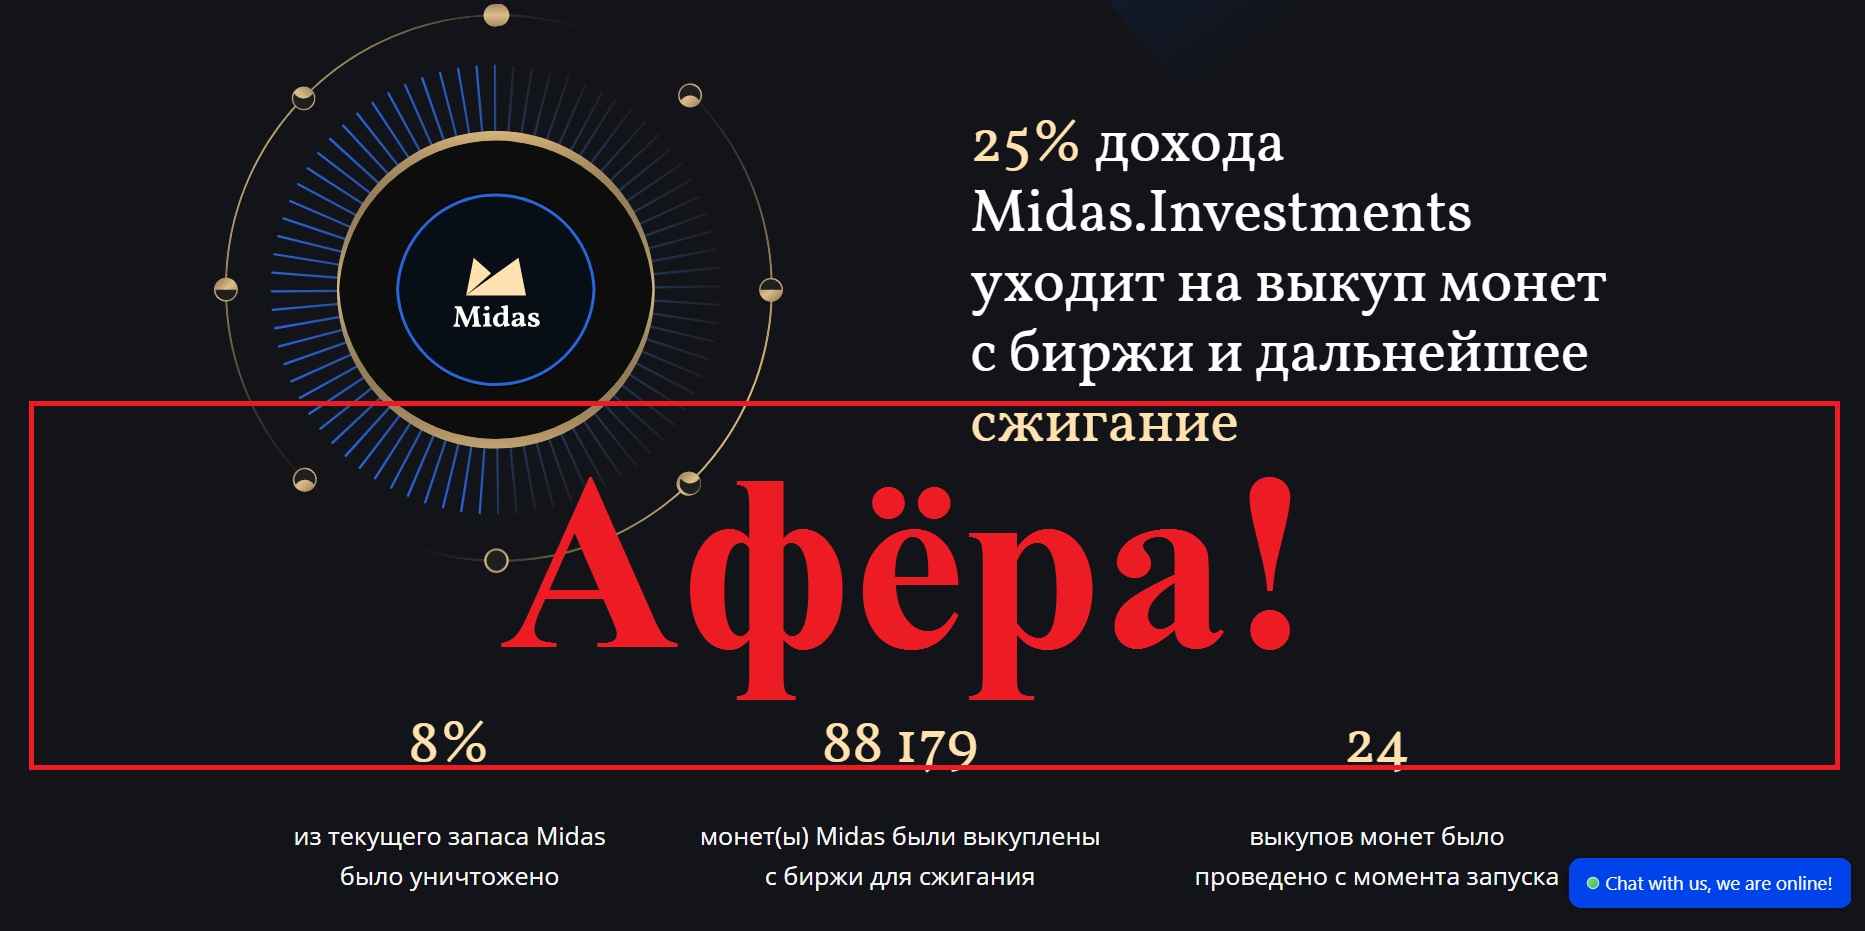 Midas Investments – обзор и отзывы о midas.investments